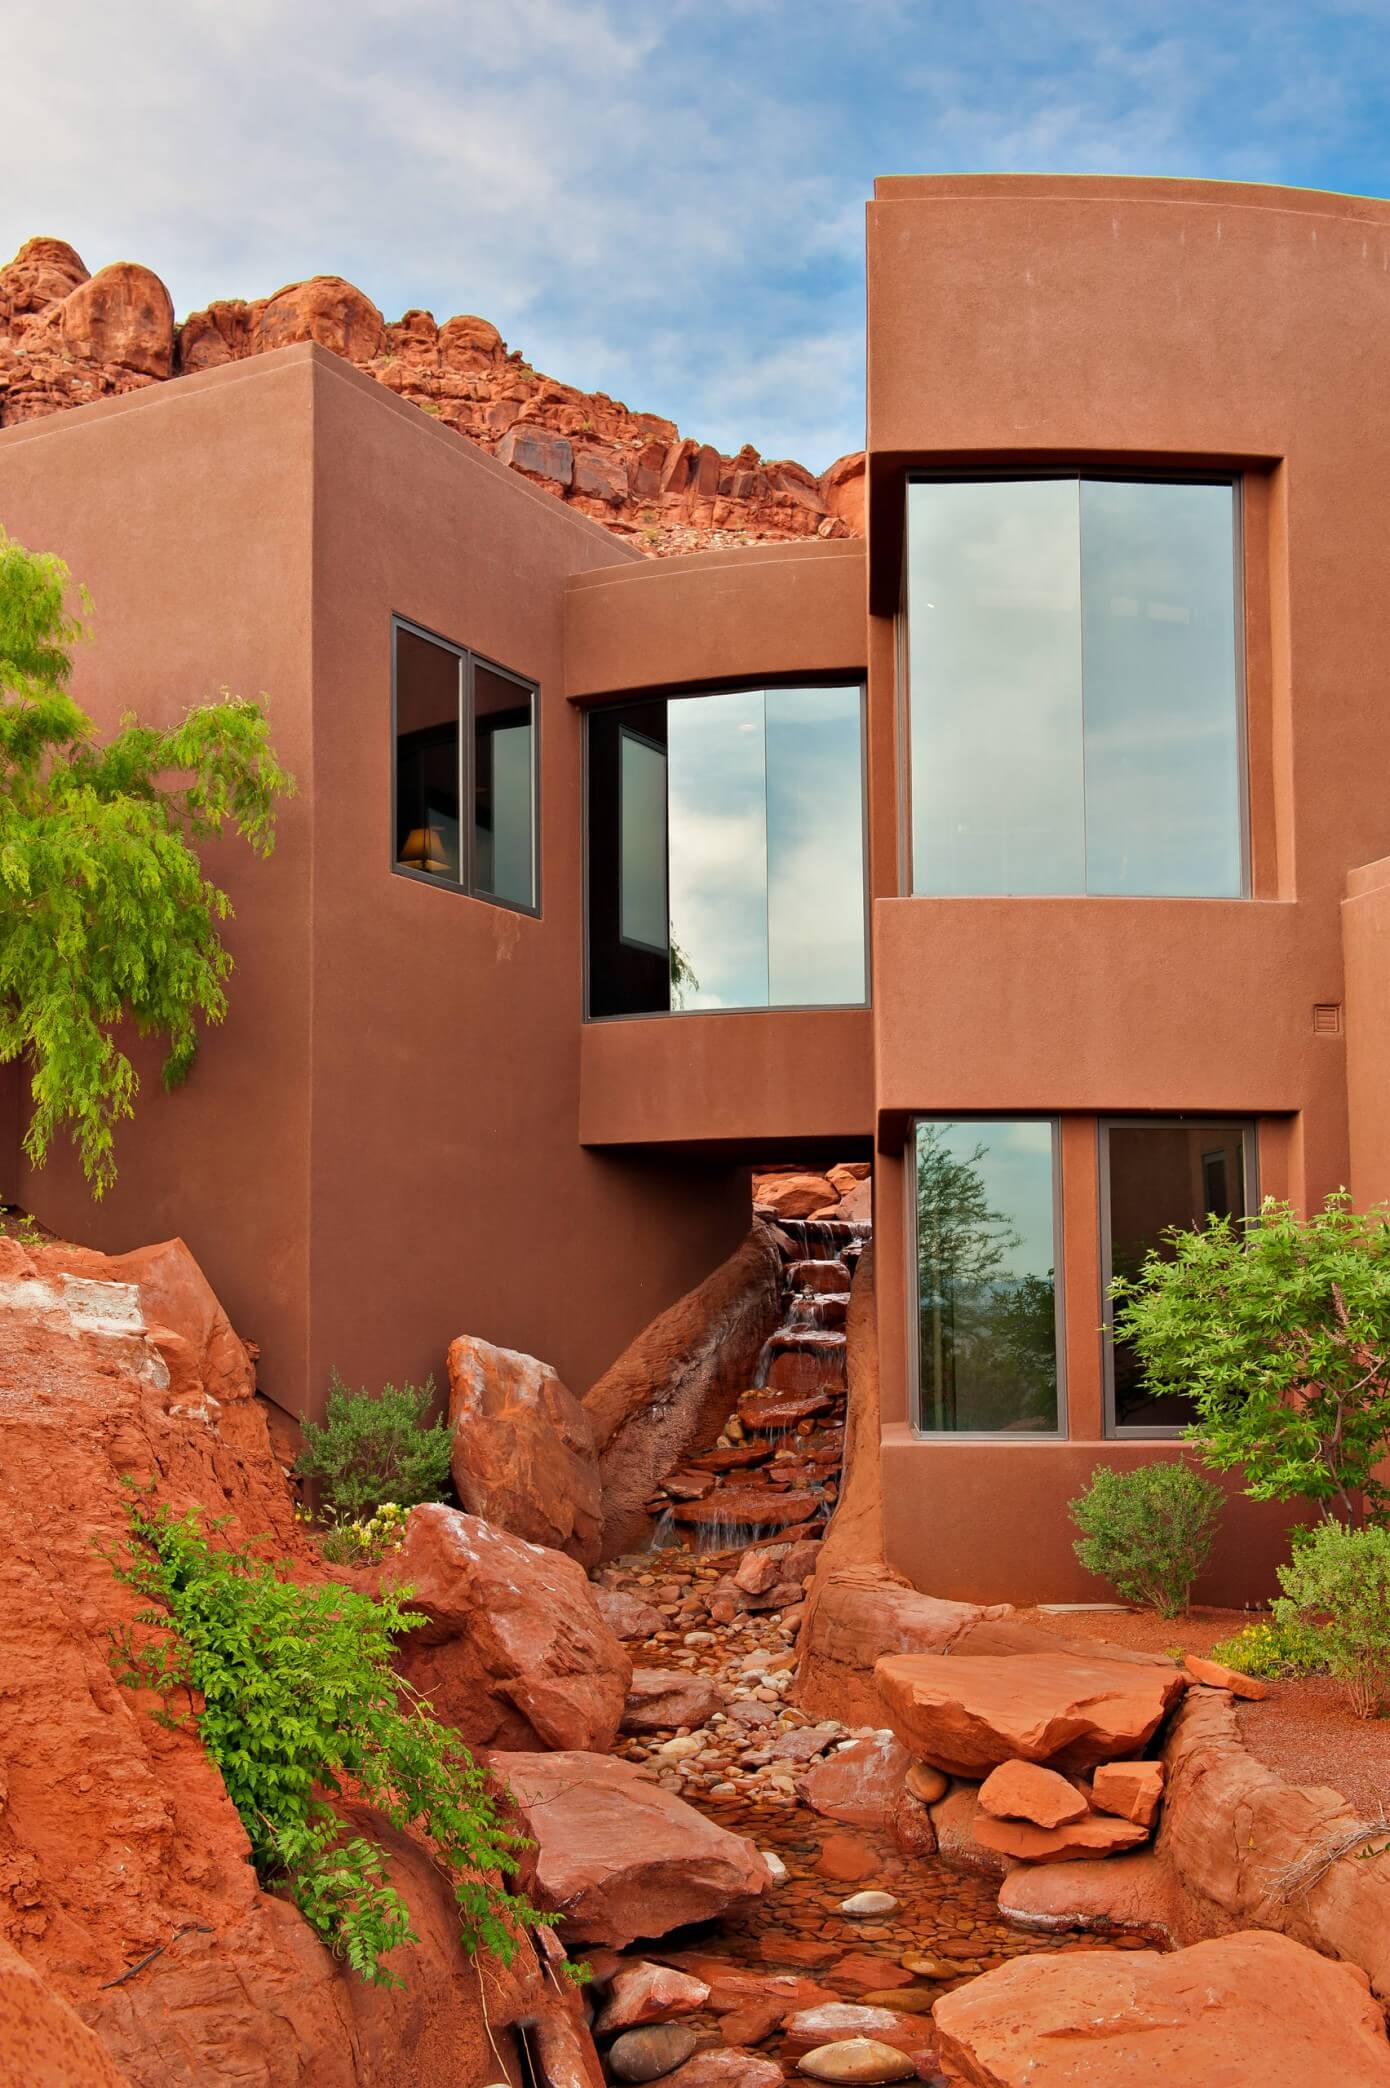 Kachina Cliffs House by McQuay Architects